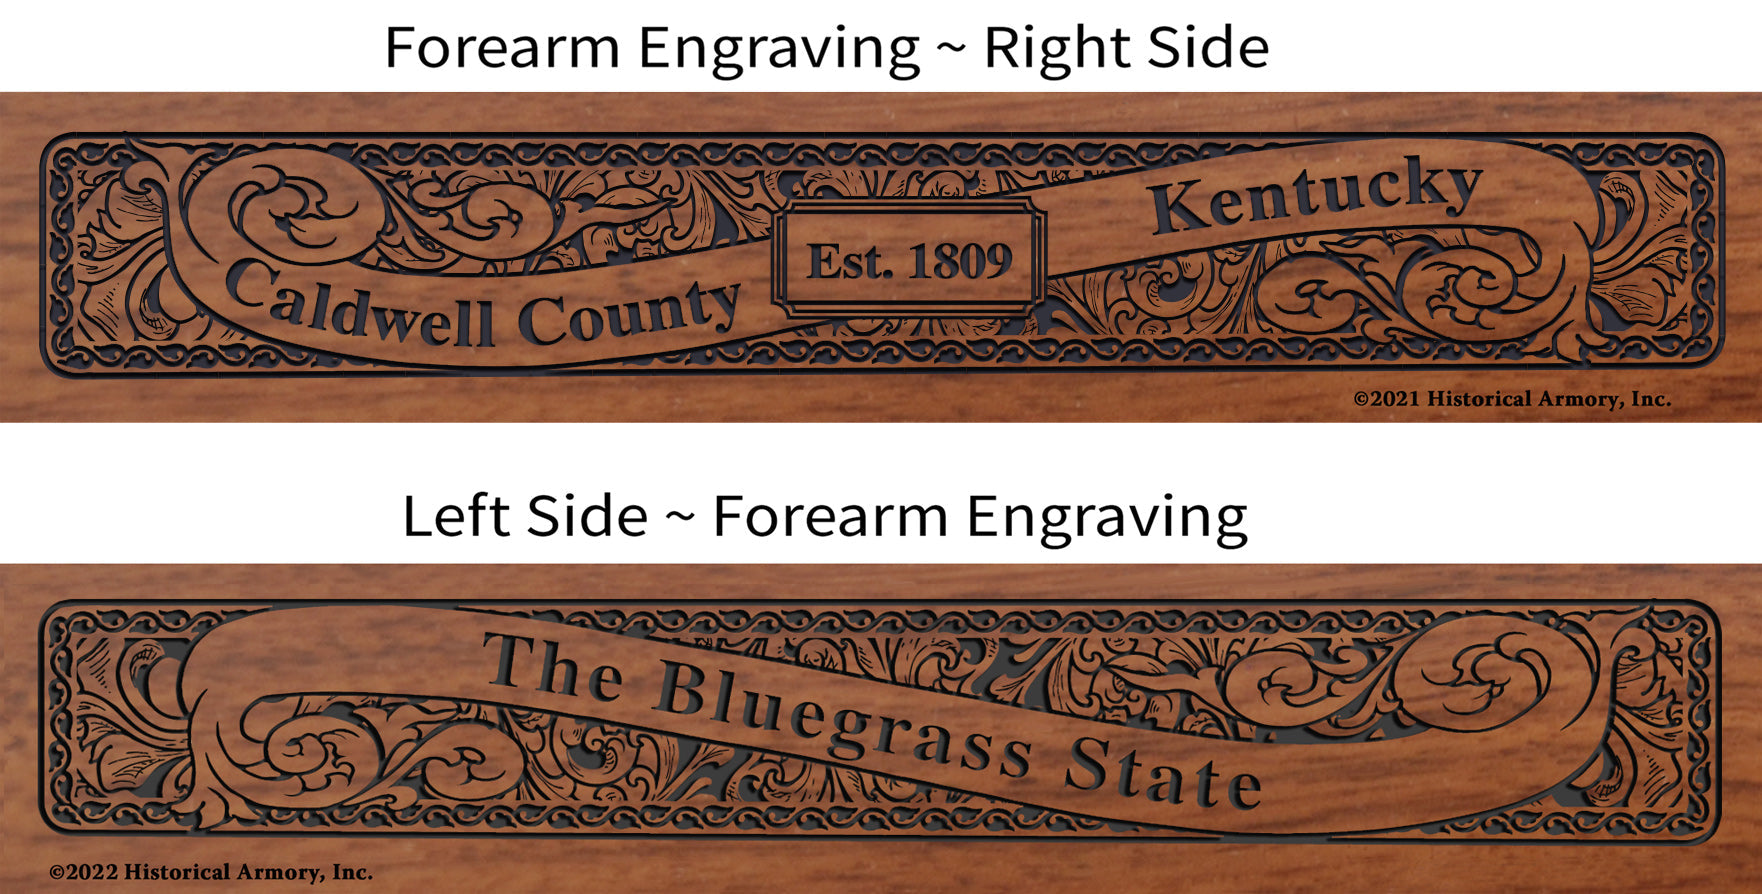 Caldwell County Kentucky Engraved Rifle Forearm